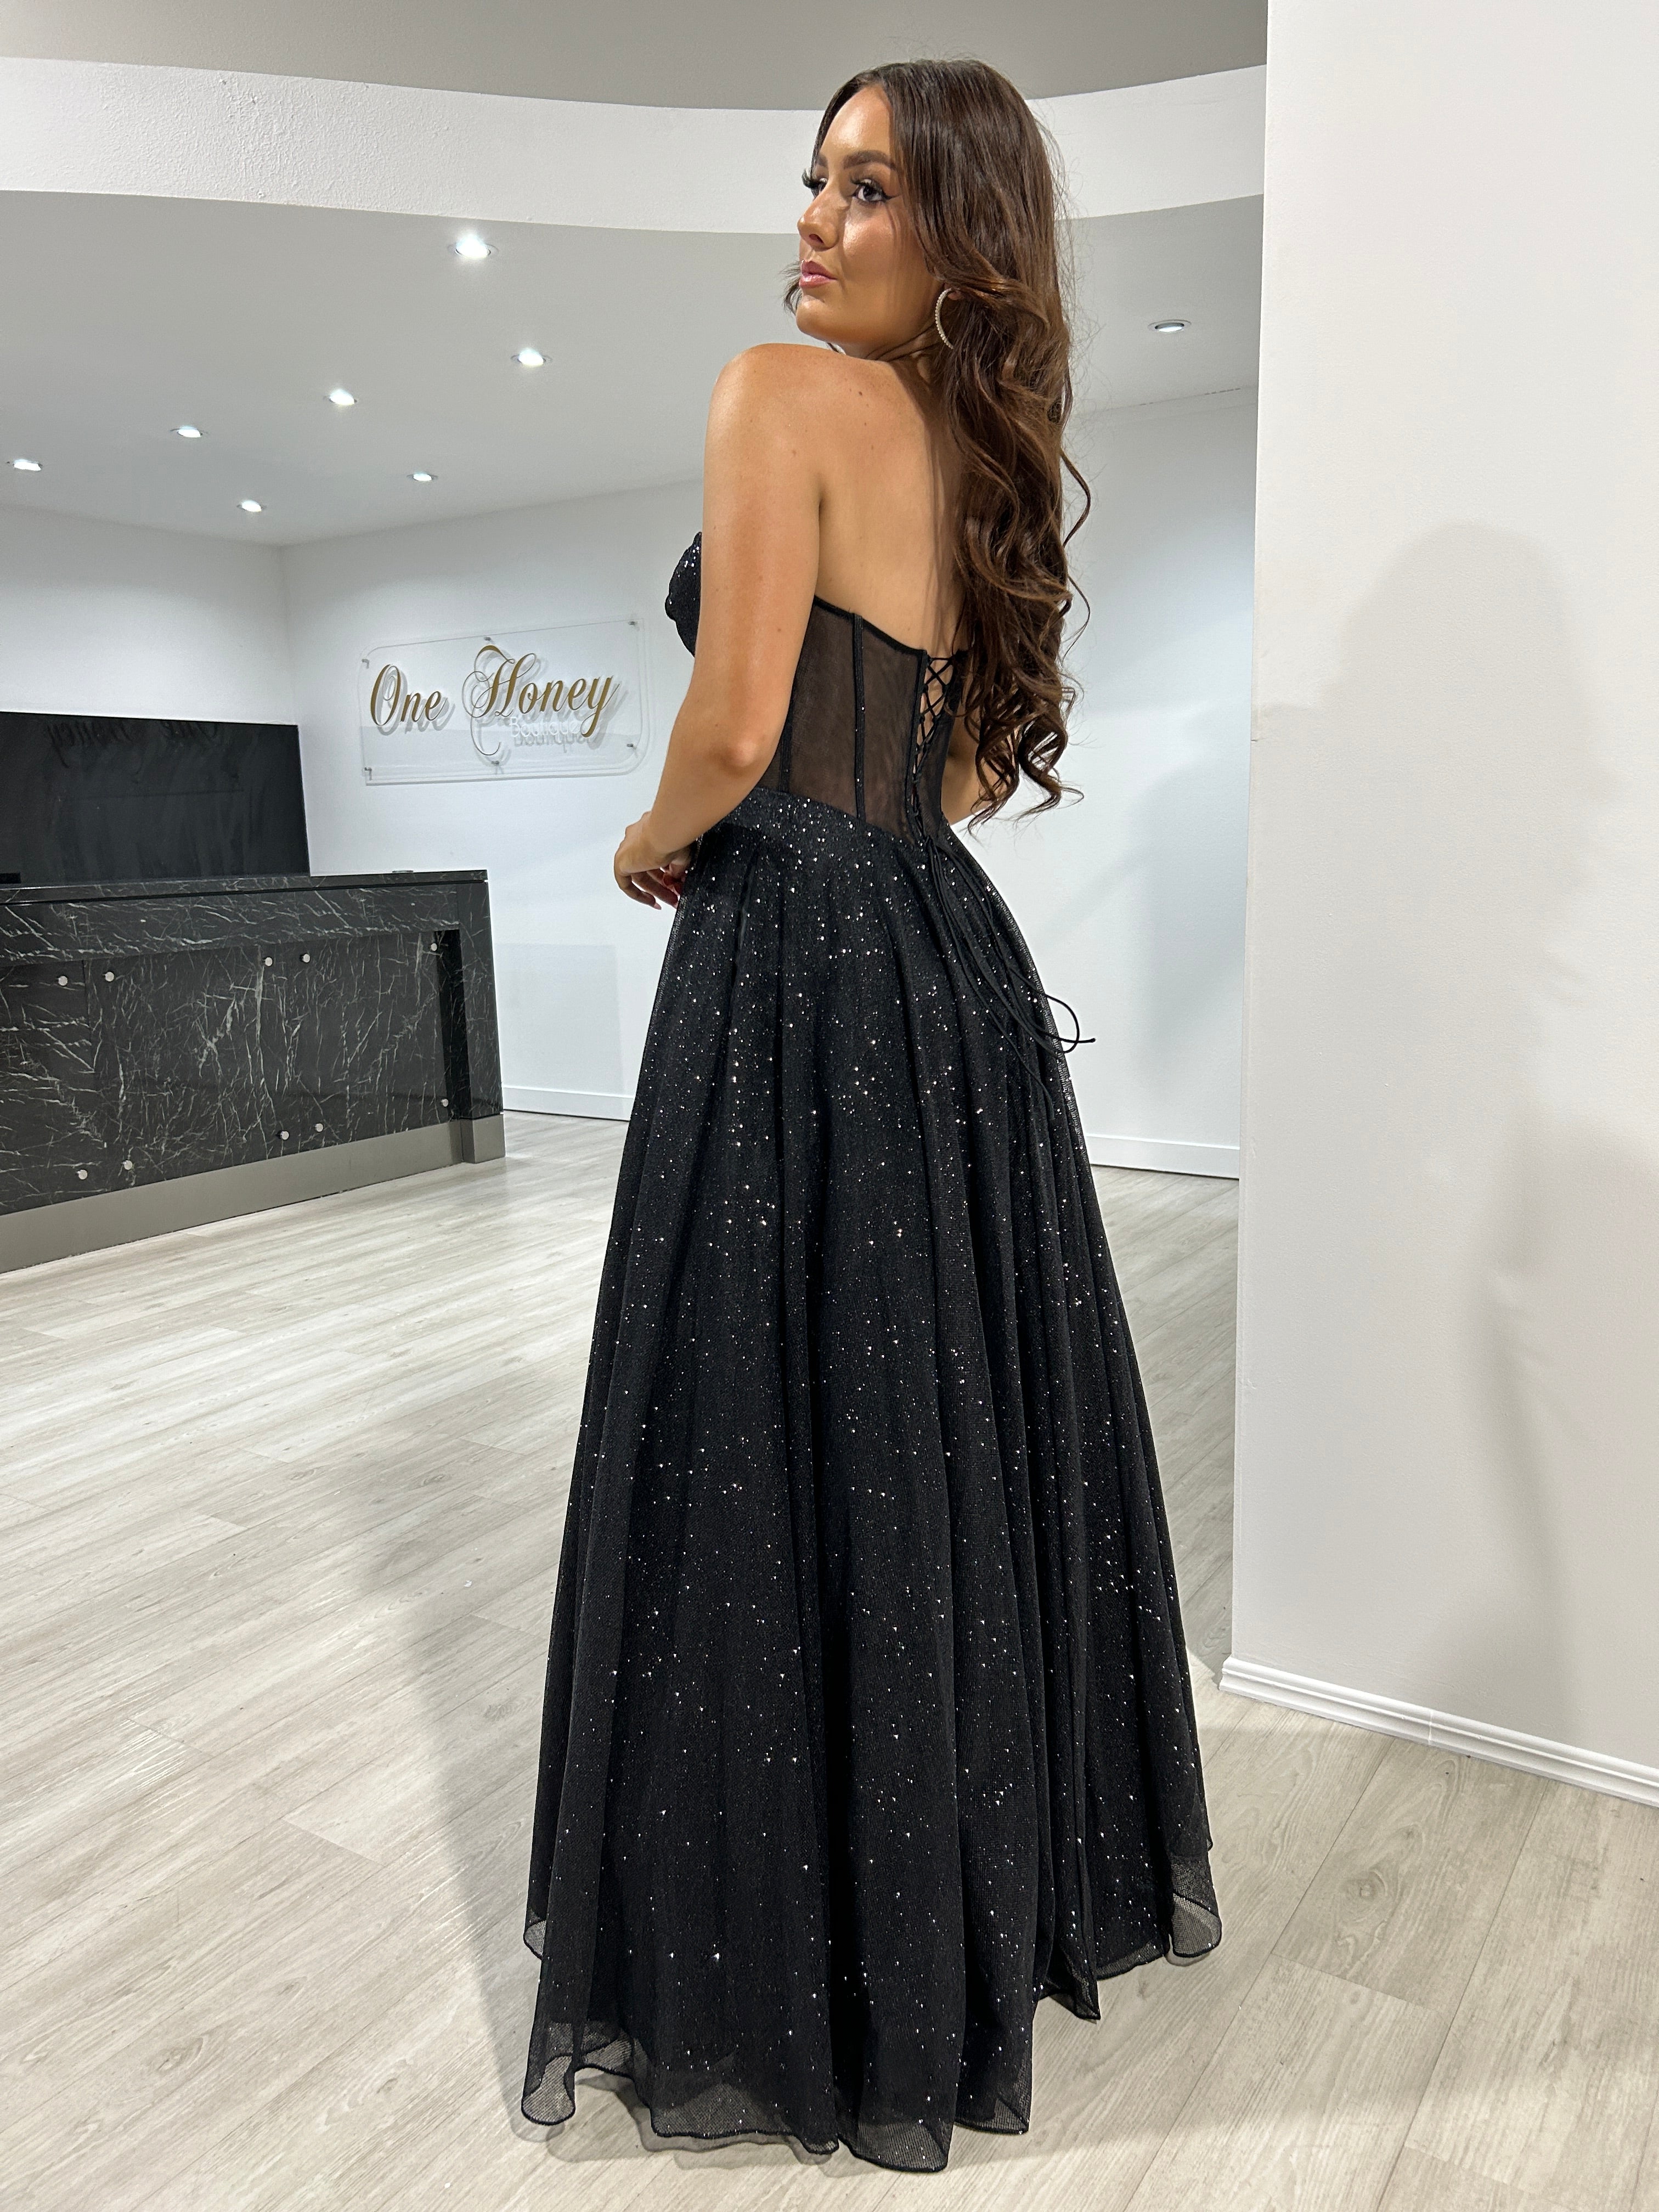 Honey Couture ALOMA Black Glitter Corset Strapless Formal Dress